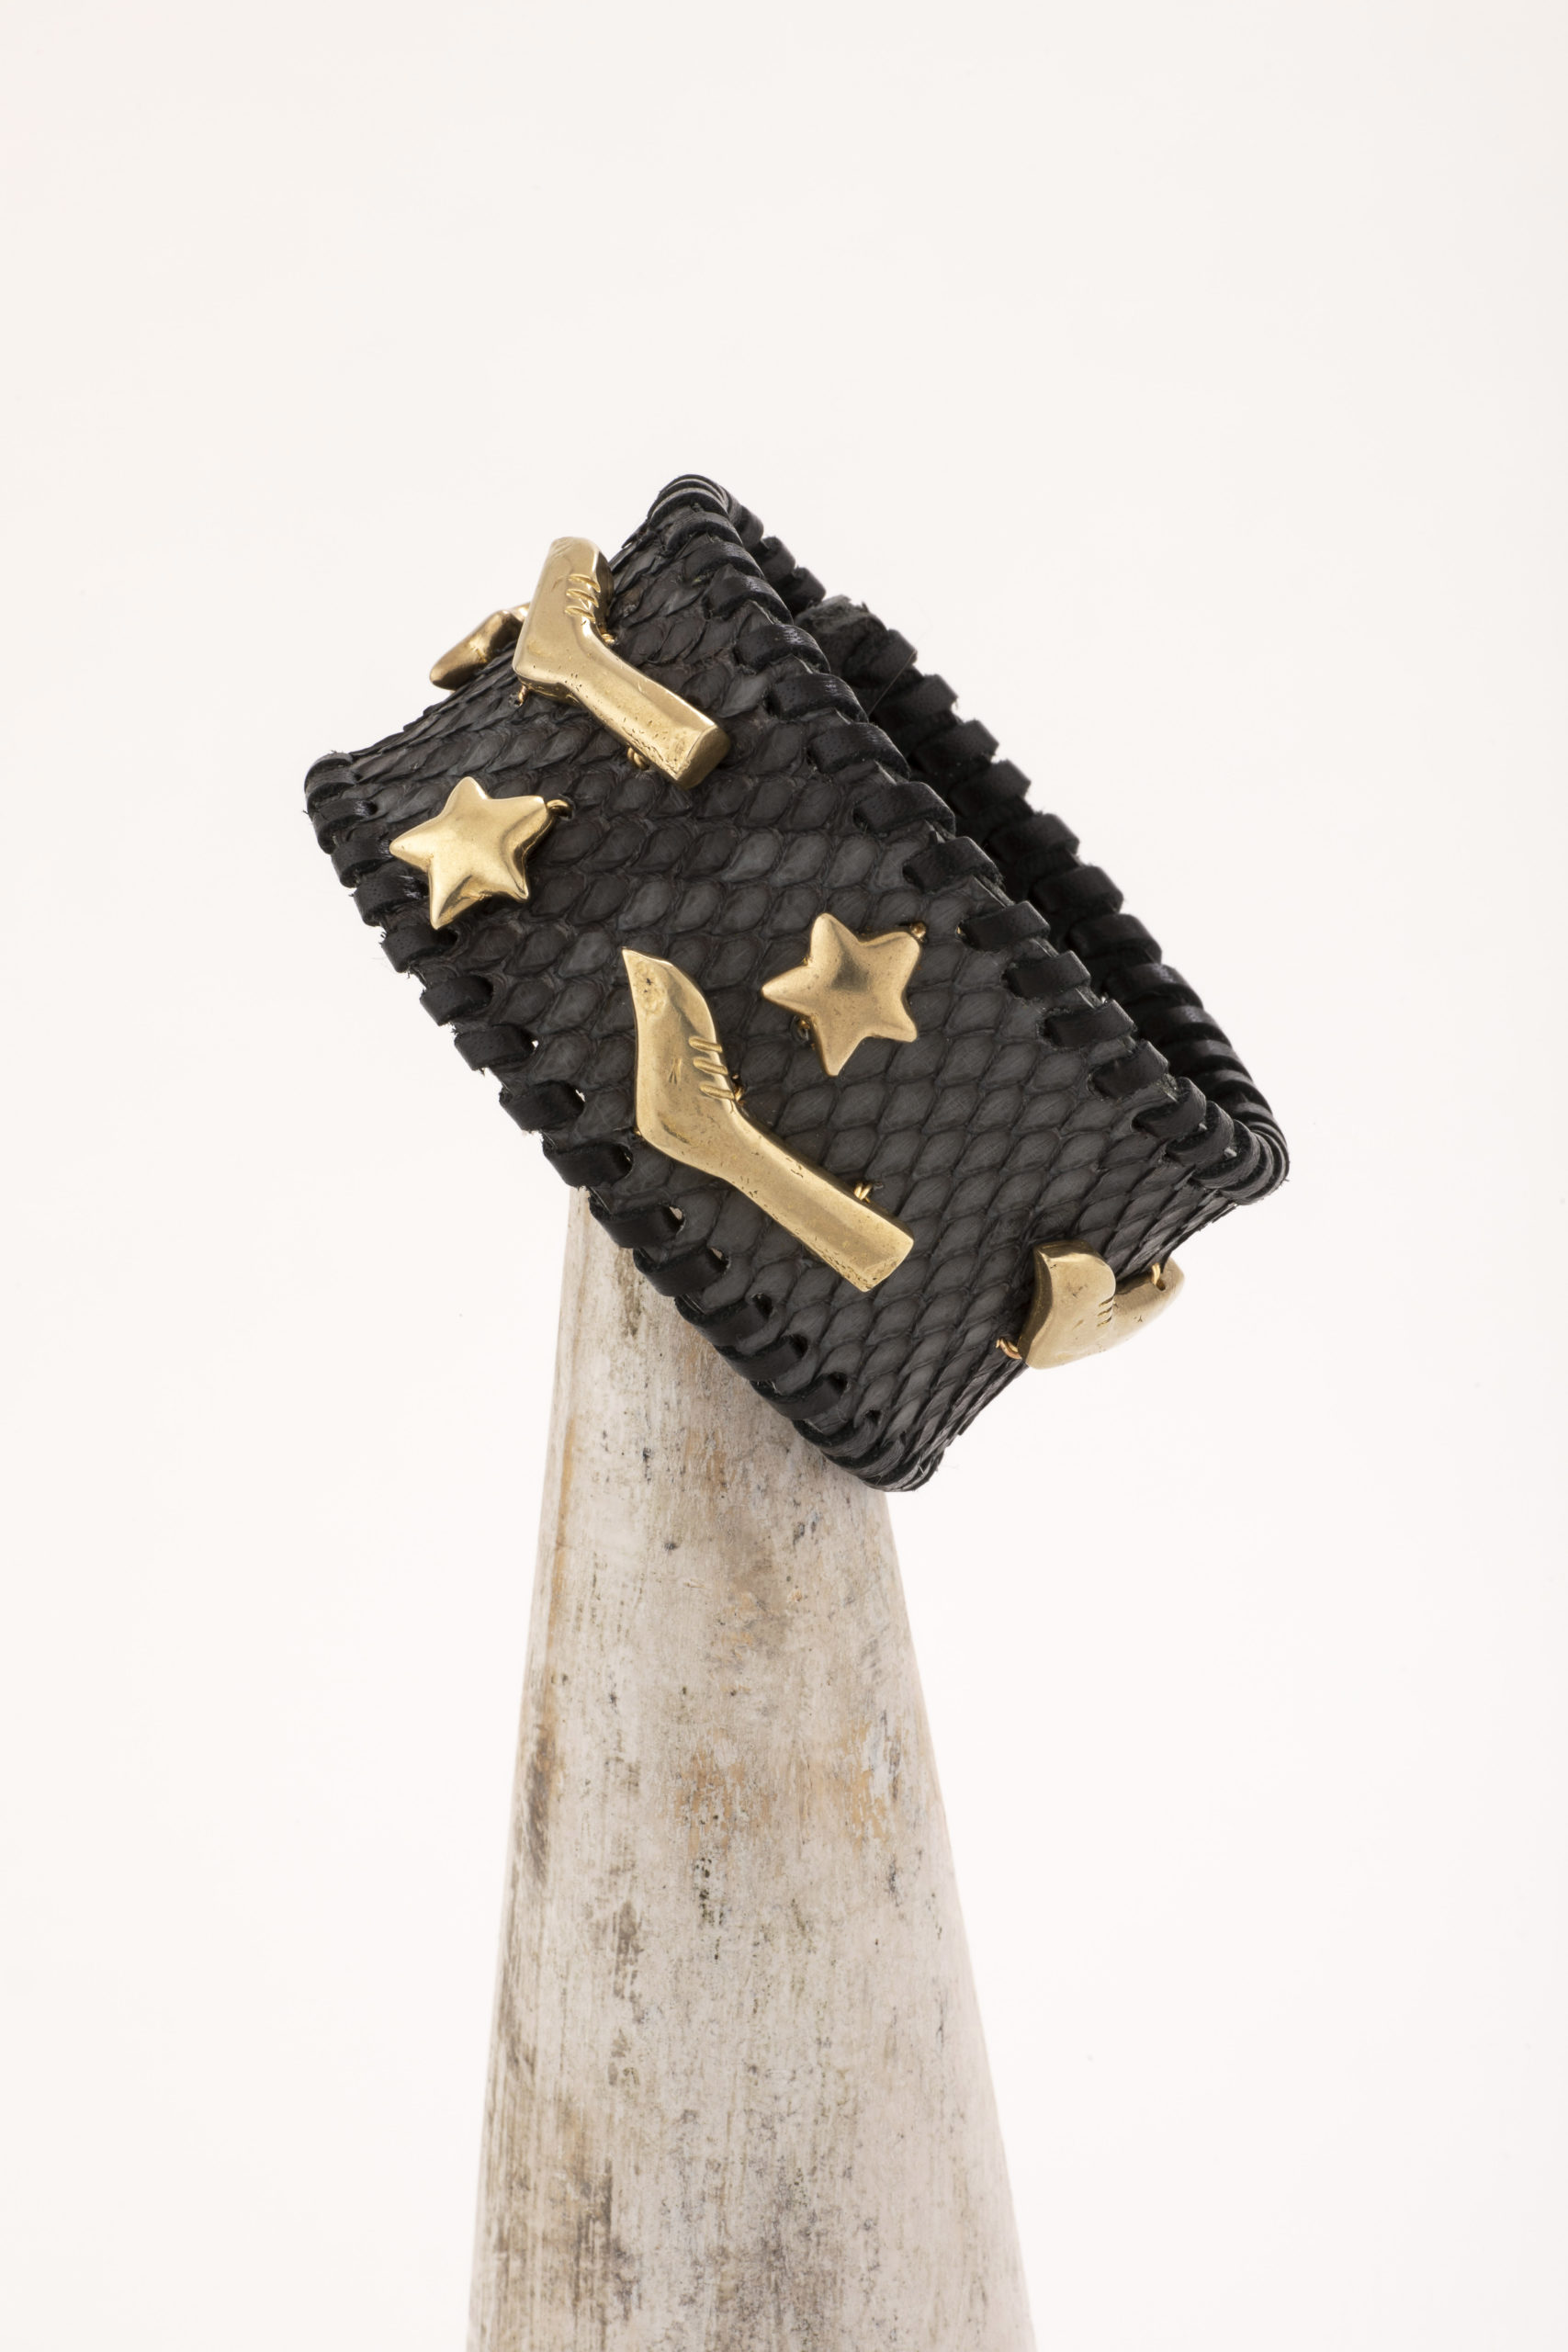 Featured image for “Kelsey Wrap Bracelet”